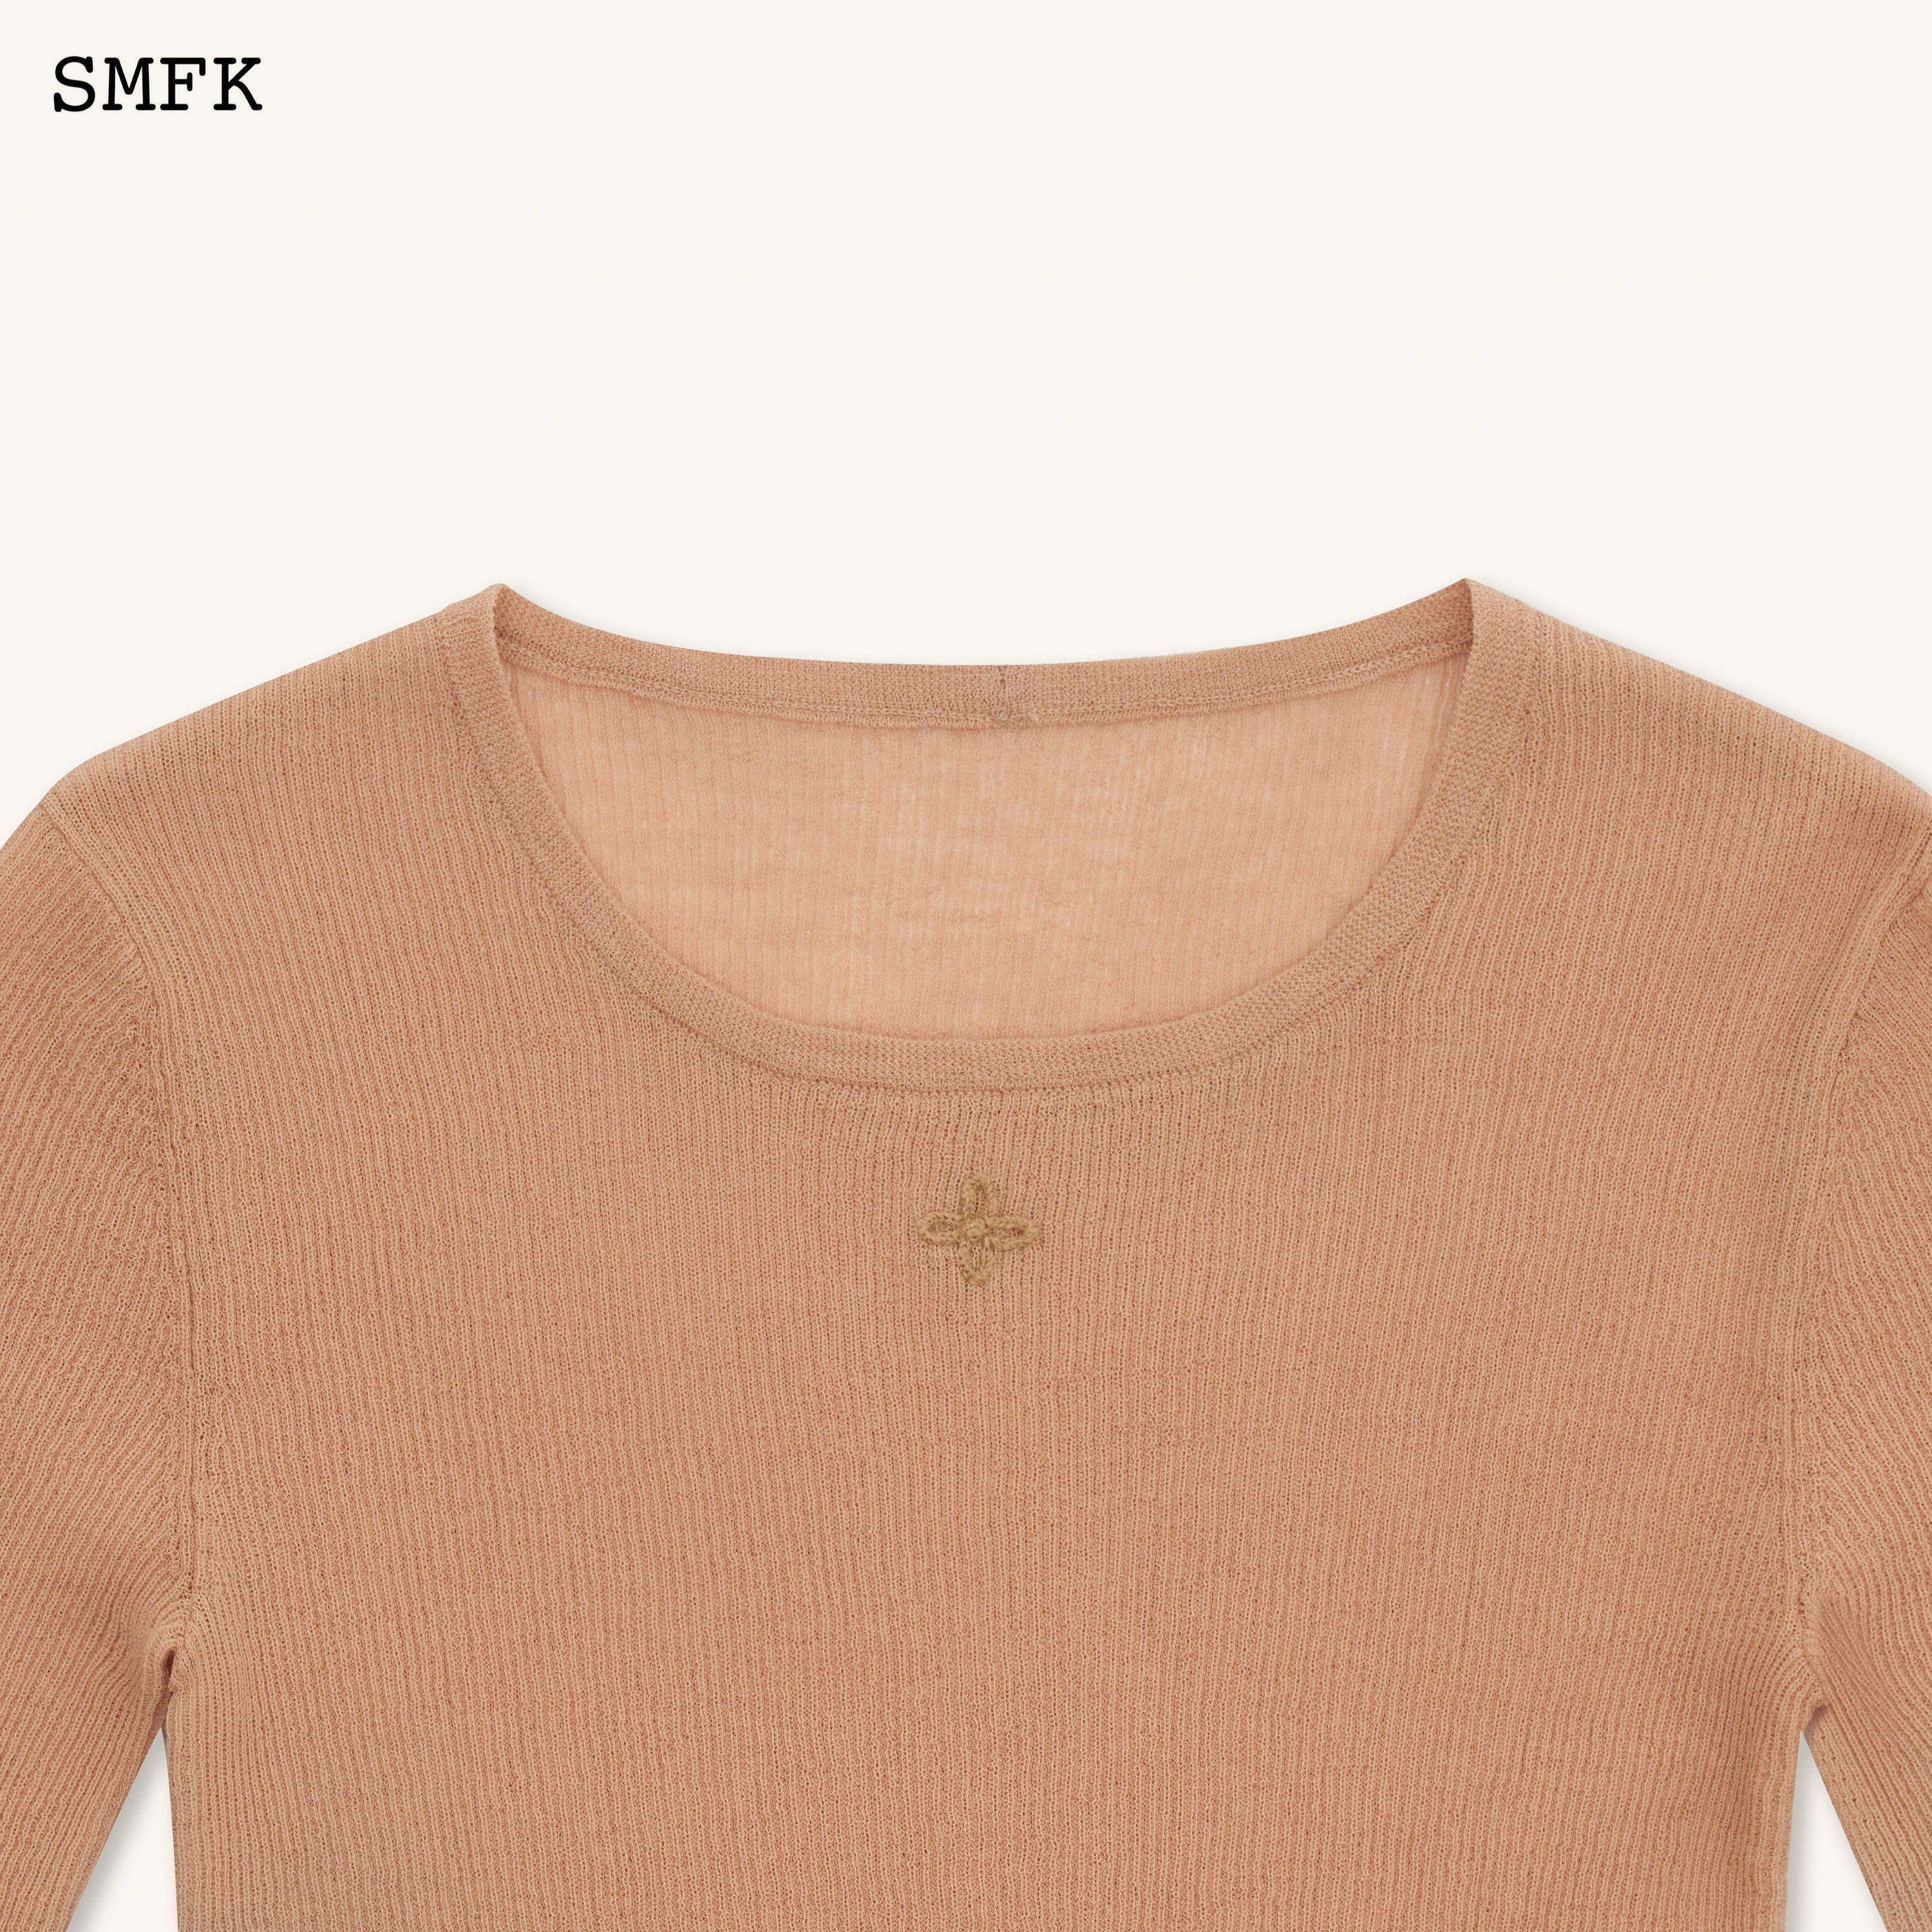 Compass Cross Classic Desert Knitted Sweater - SMFK Official